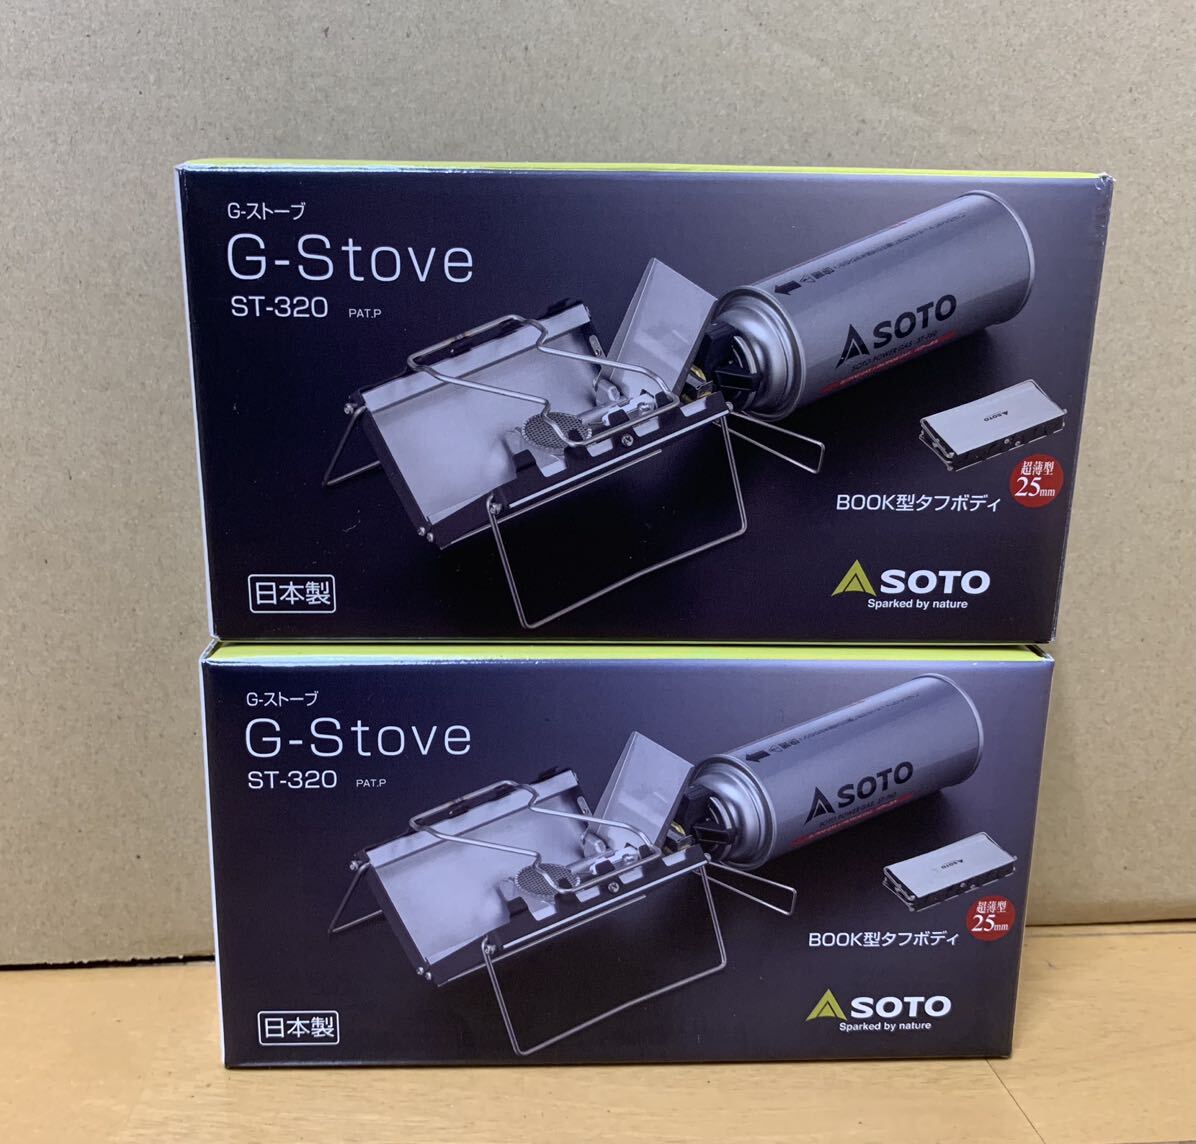 SOTO ソト シングルバーナー Gストーブ ST-320 2箱セットの画像1